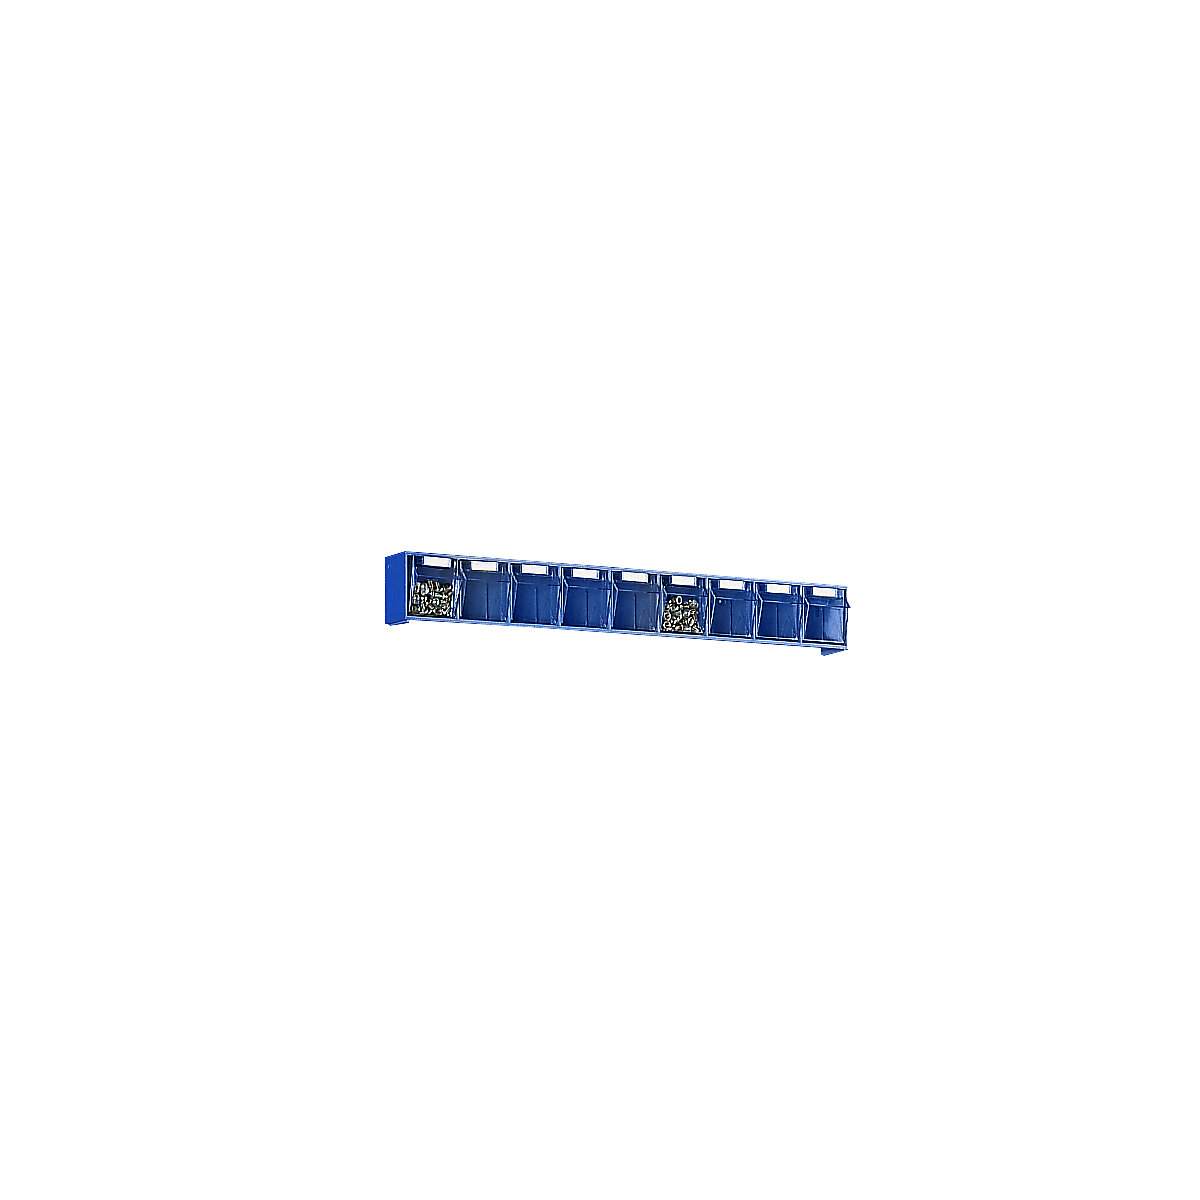 Sustav složivih kutija, VxŠxD kućišta 77 x 600 x 62 mm, 9 kutija, u plavoj boji-6